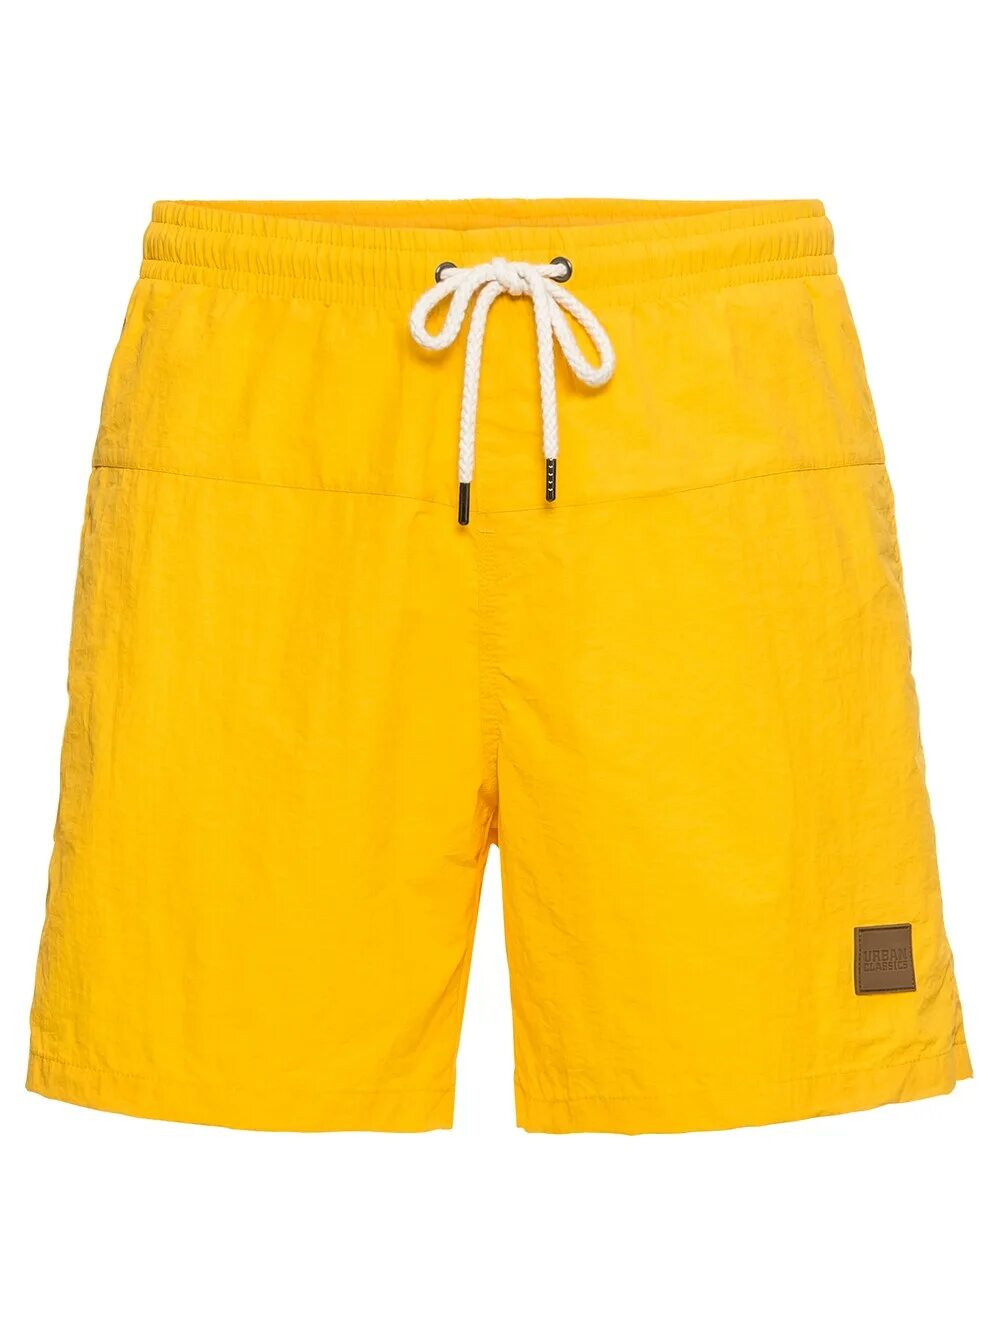 Желтые мужские шорты. Шорты для плавания RRD. RRD шорты мужские для плаванья. RRD шорты мужские. Желтые шорты мужские.